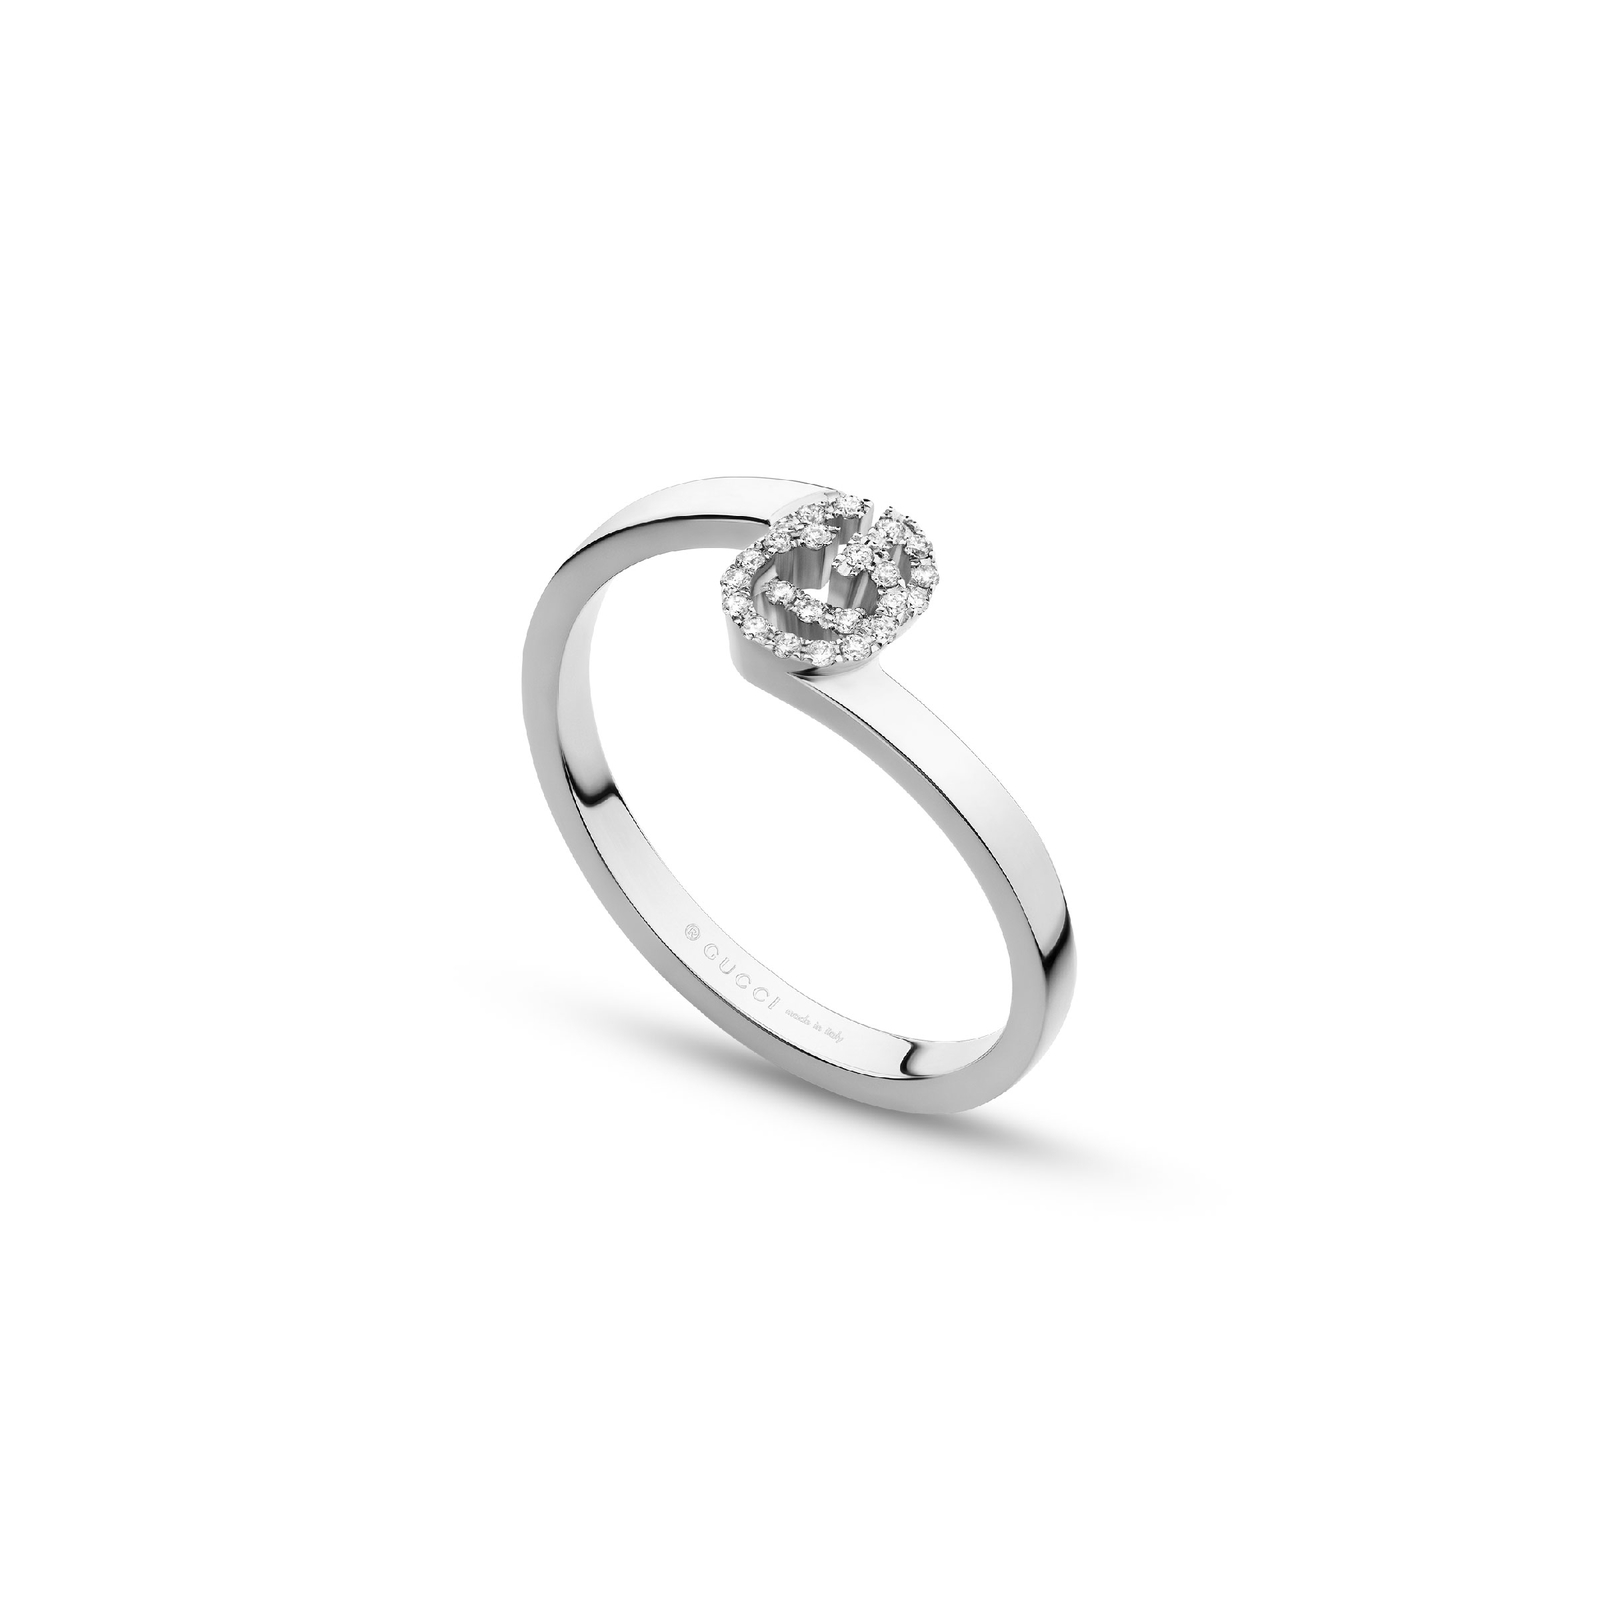 diamond gucci ring